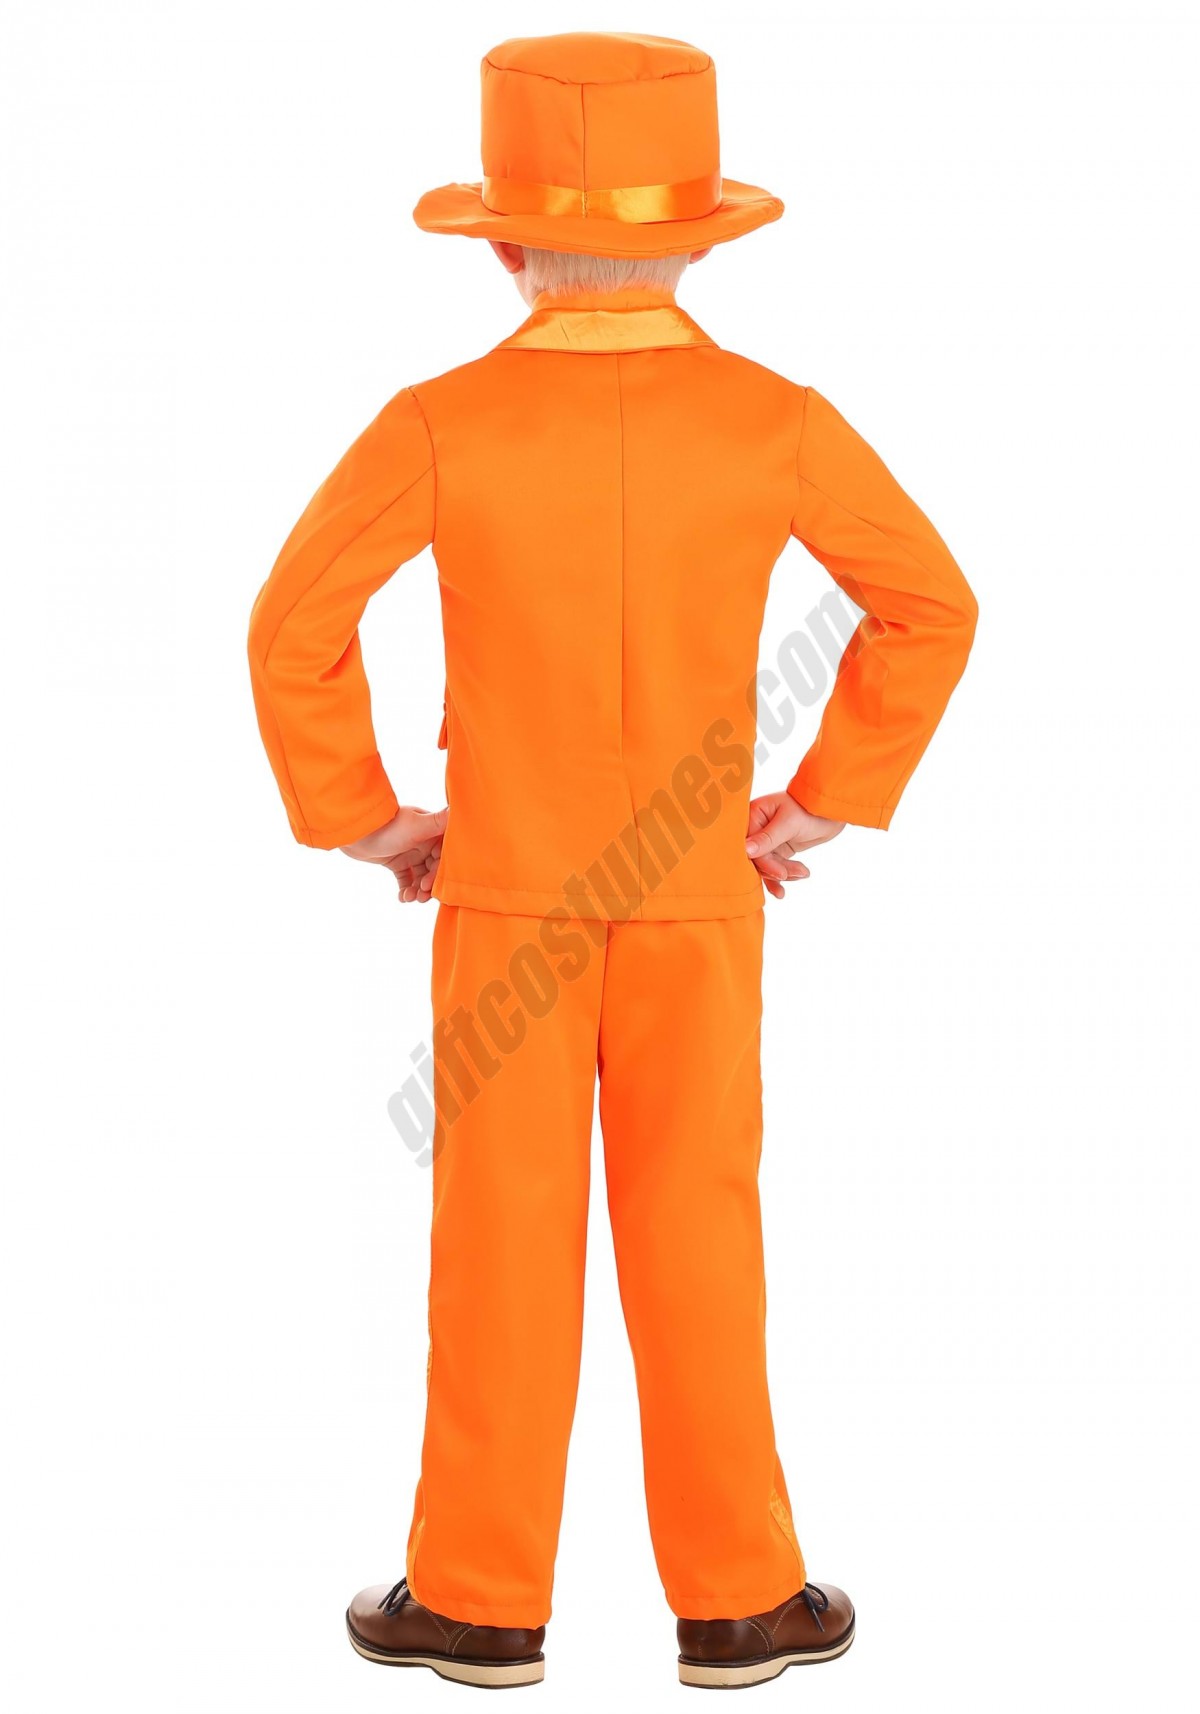 Toddler Orange Tuxedo Costume Promotions - -4